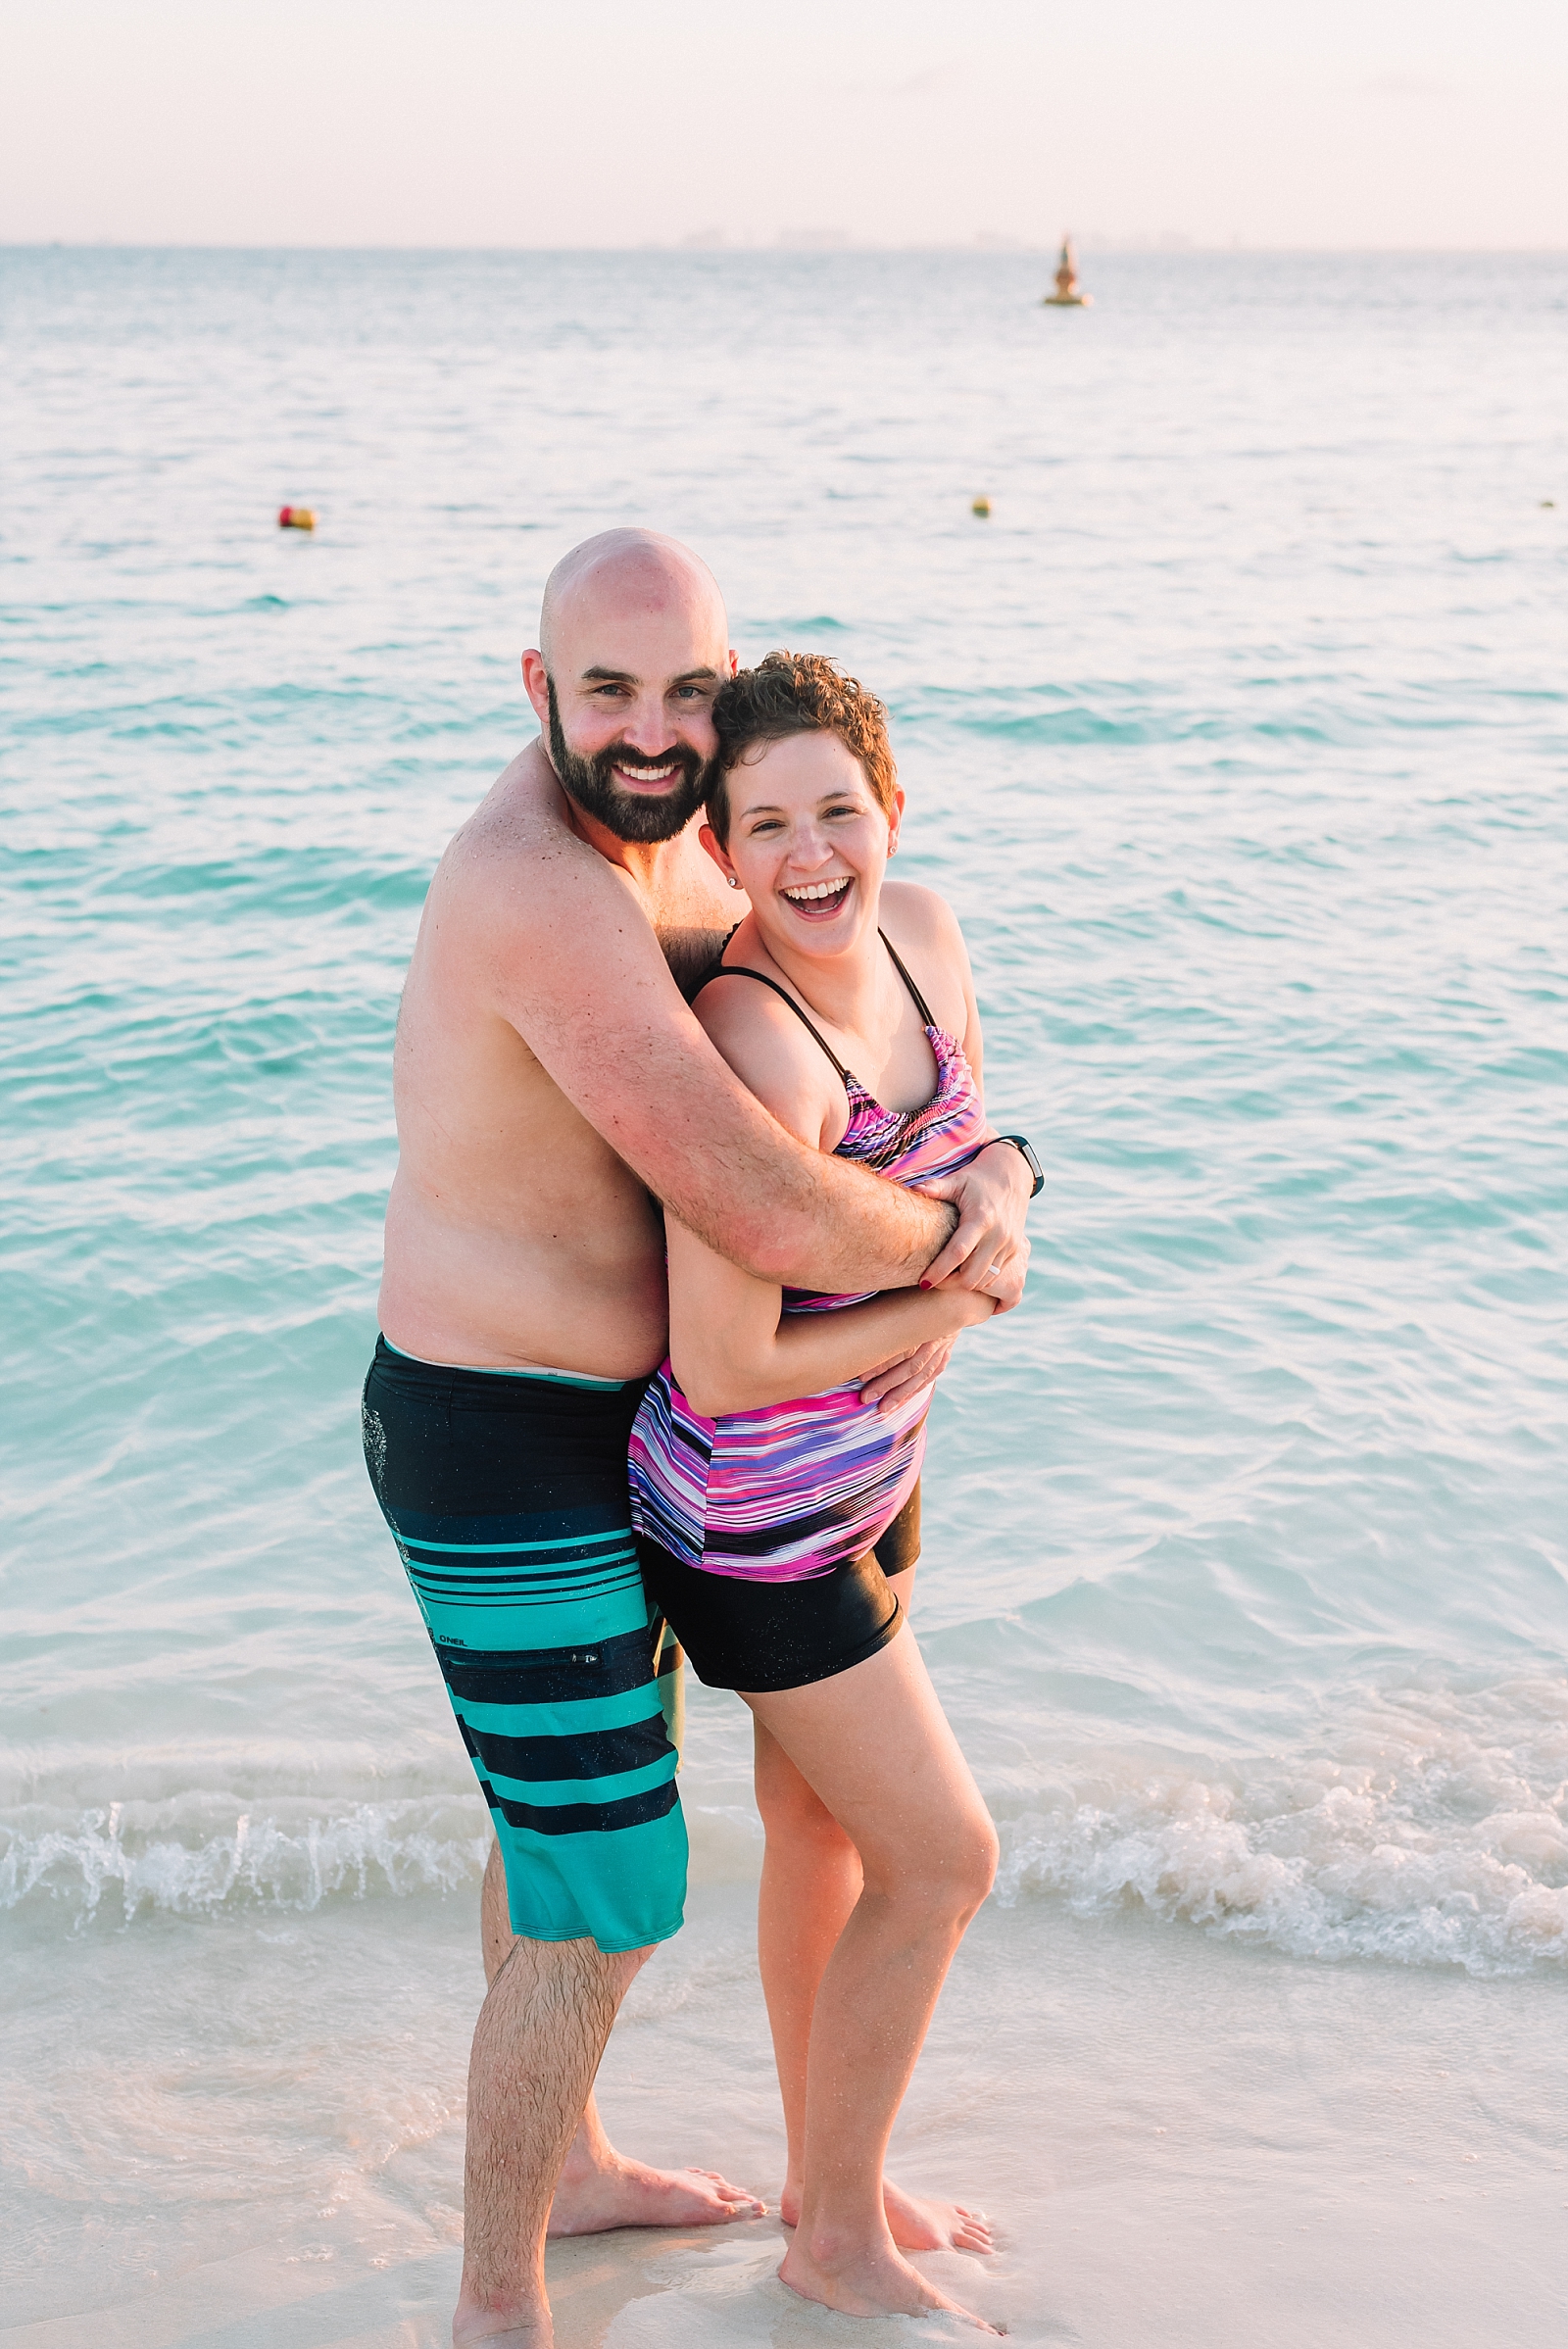 isla mujeres romance couple on the beach lifestyle mexico travel sunset